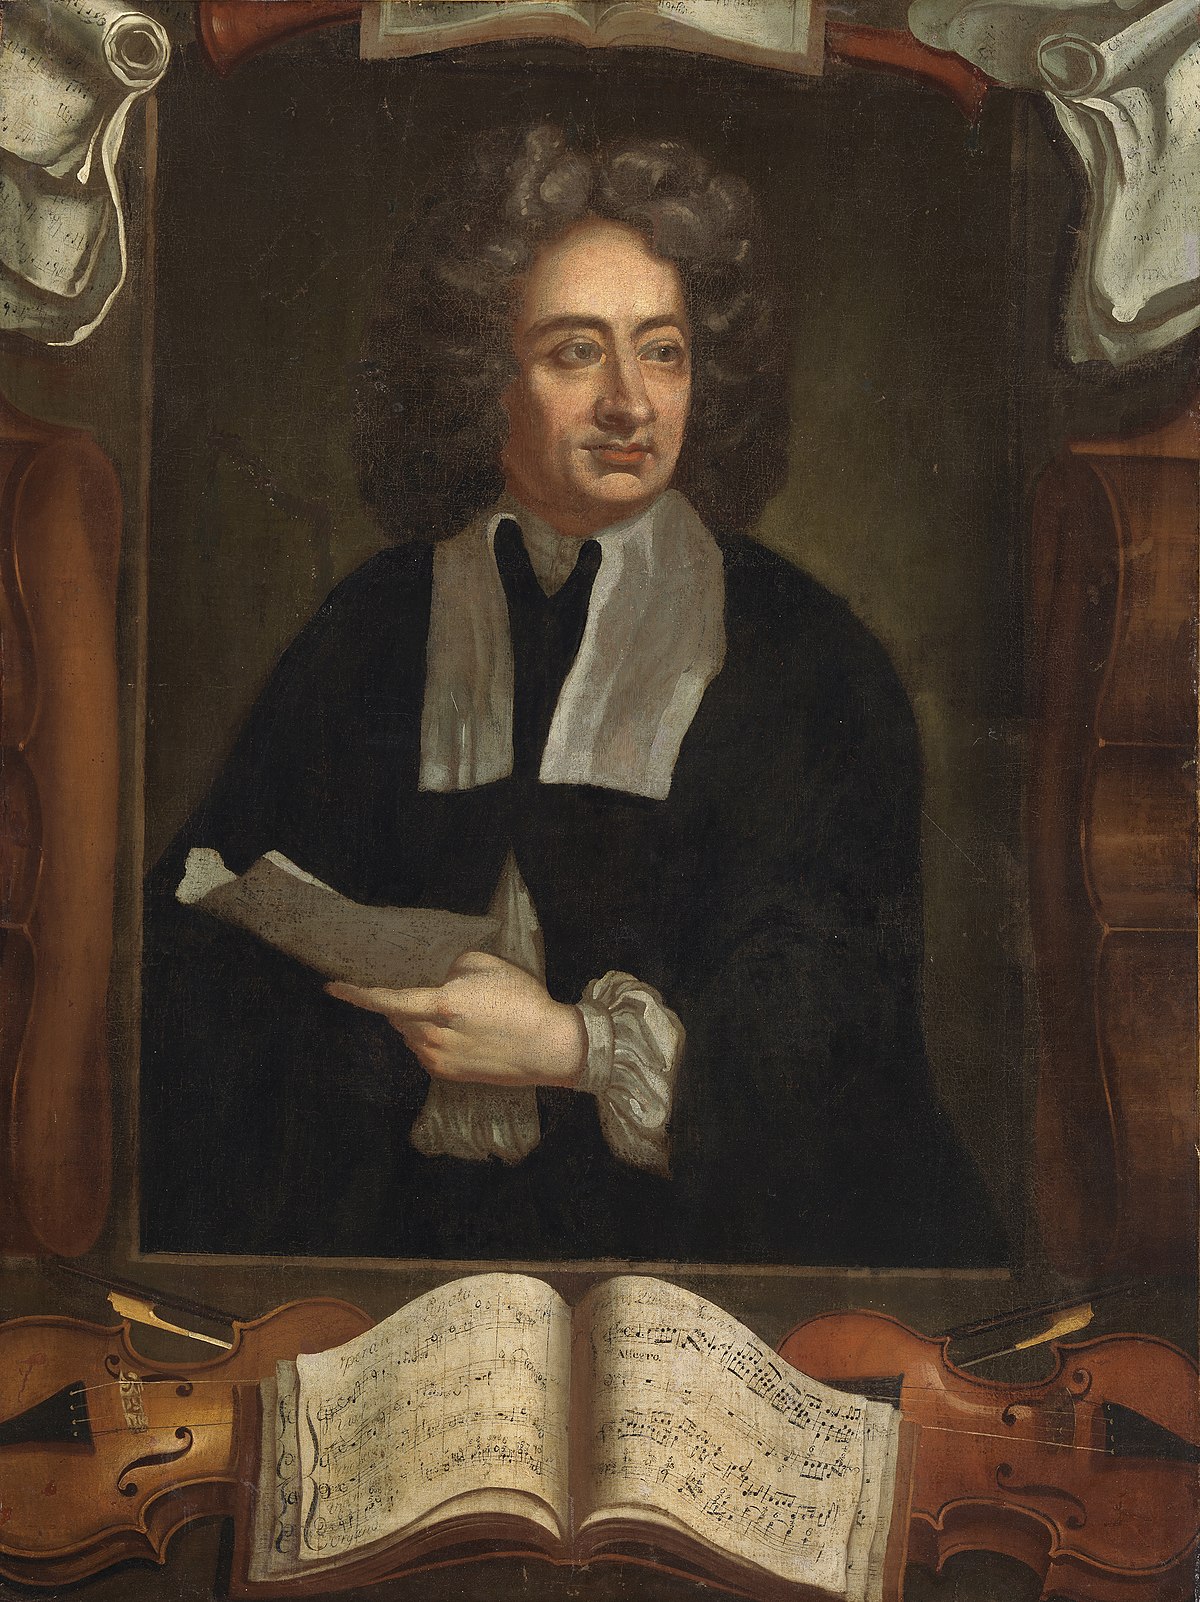 Portrait of Arcangelo Corelli (1653-1713), Composer and Violinist - Wikidata